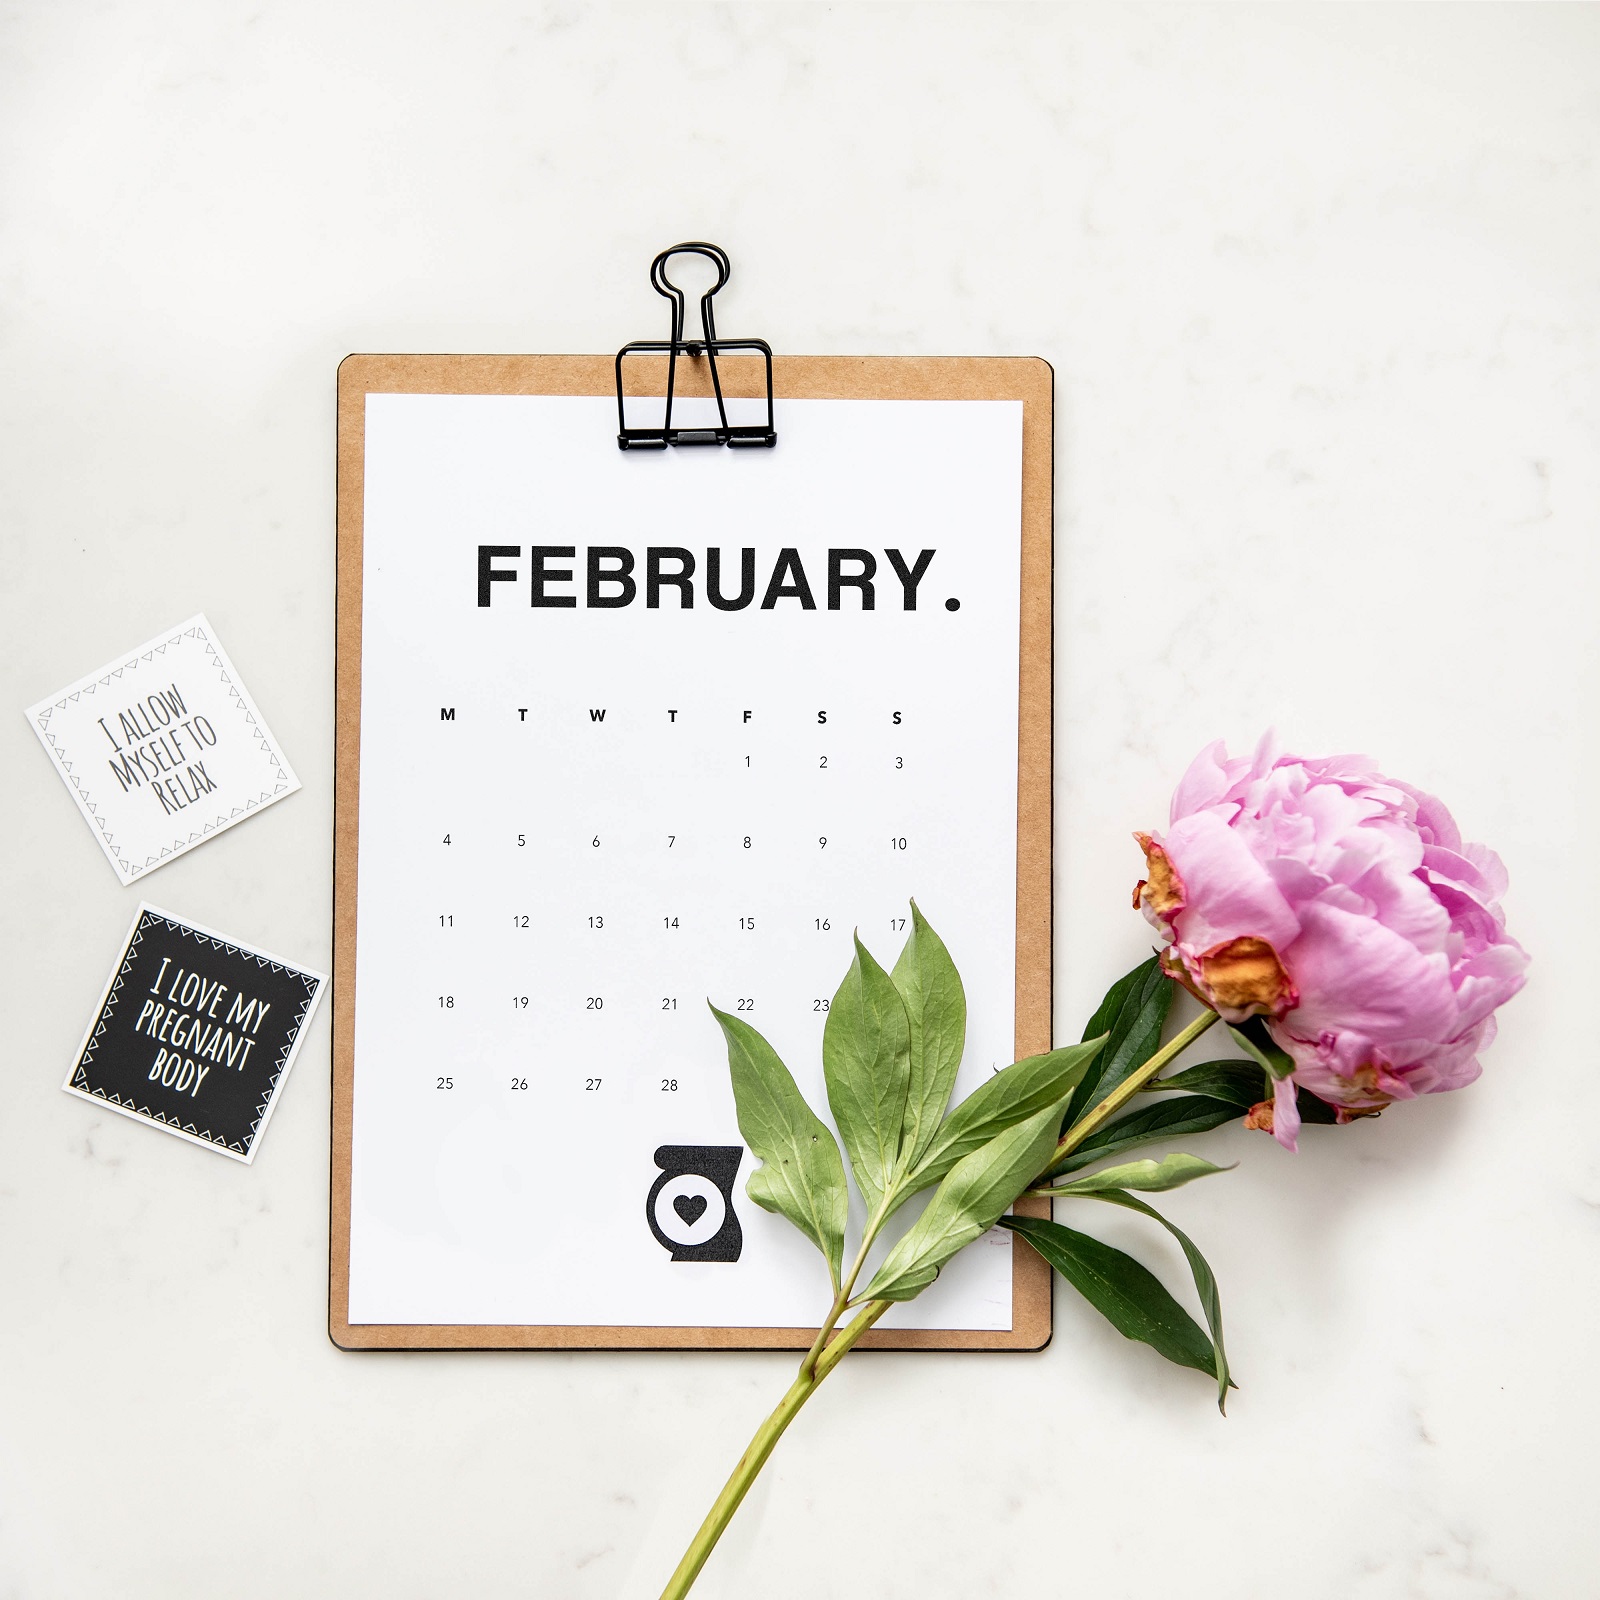 February calendar 2020 for Jean-Luc Andriot blog 013120